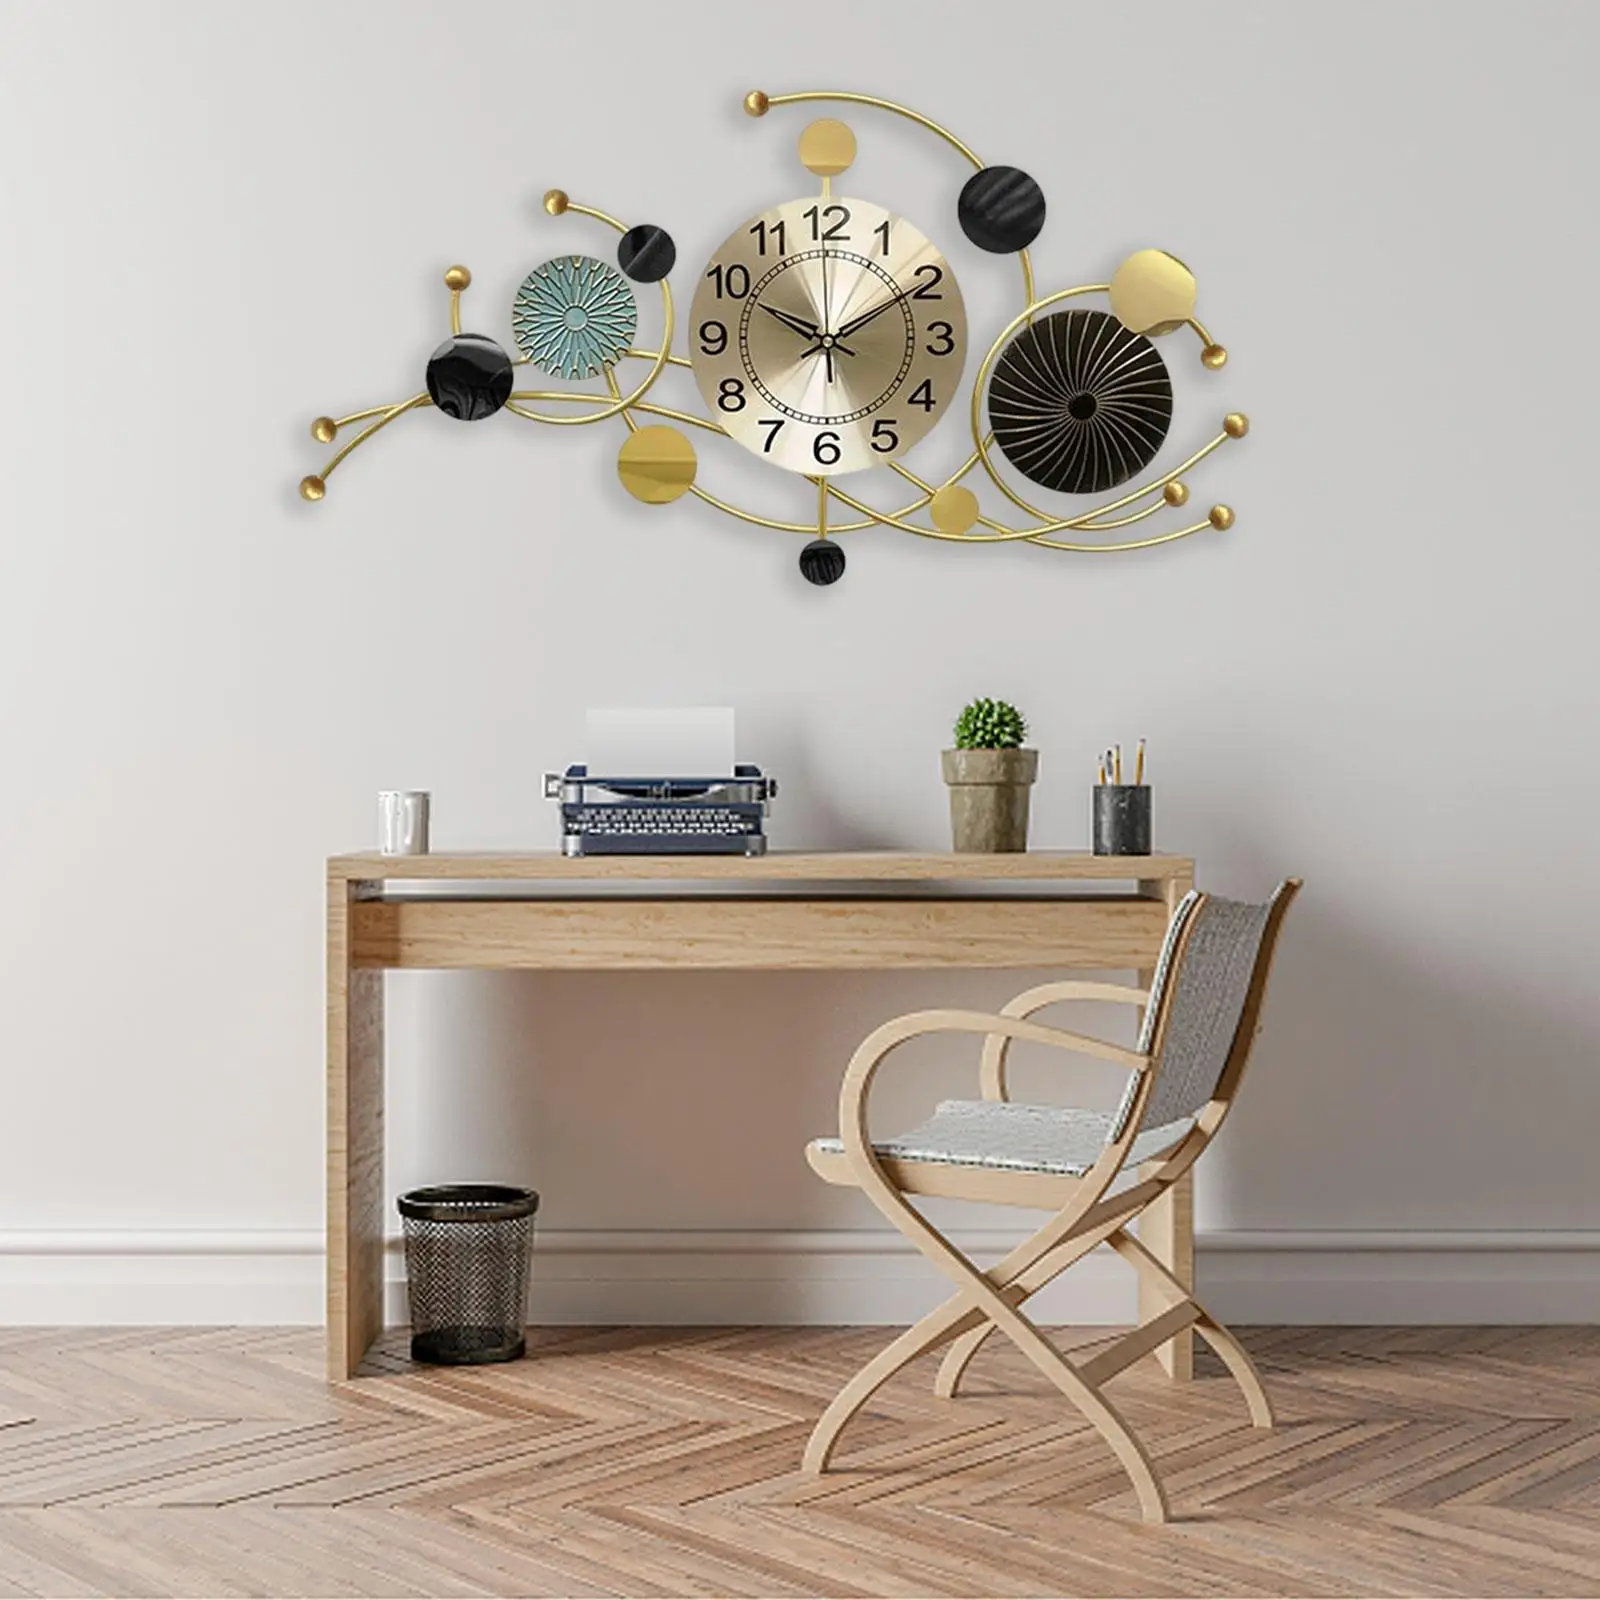 Modern Large Wall Clock Hanging Clocks Silent Sweep Circular Wall Clocks for Home Bedroom Office Shop Living Room Decor